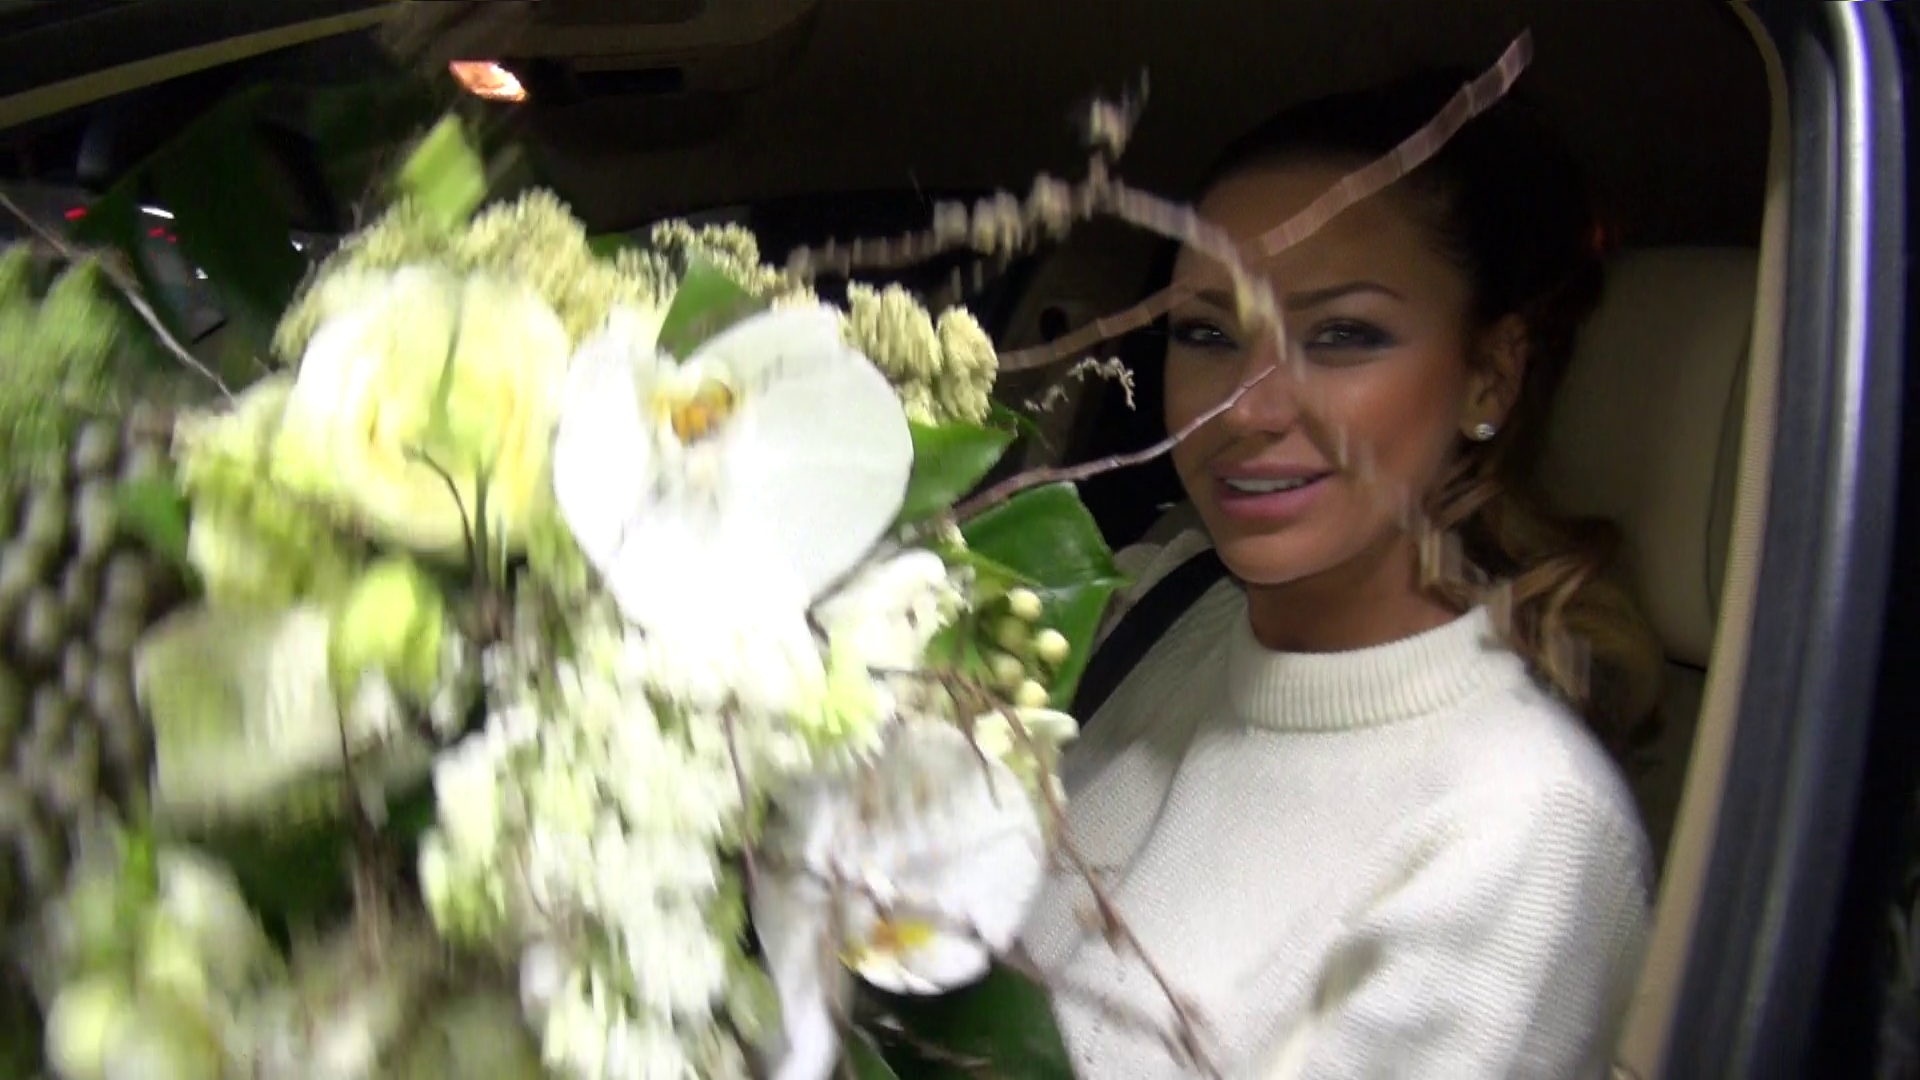 Bianca a primuit un buchet de flori de la un admirator, care i l-a lasat pe masina